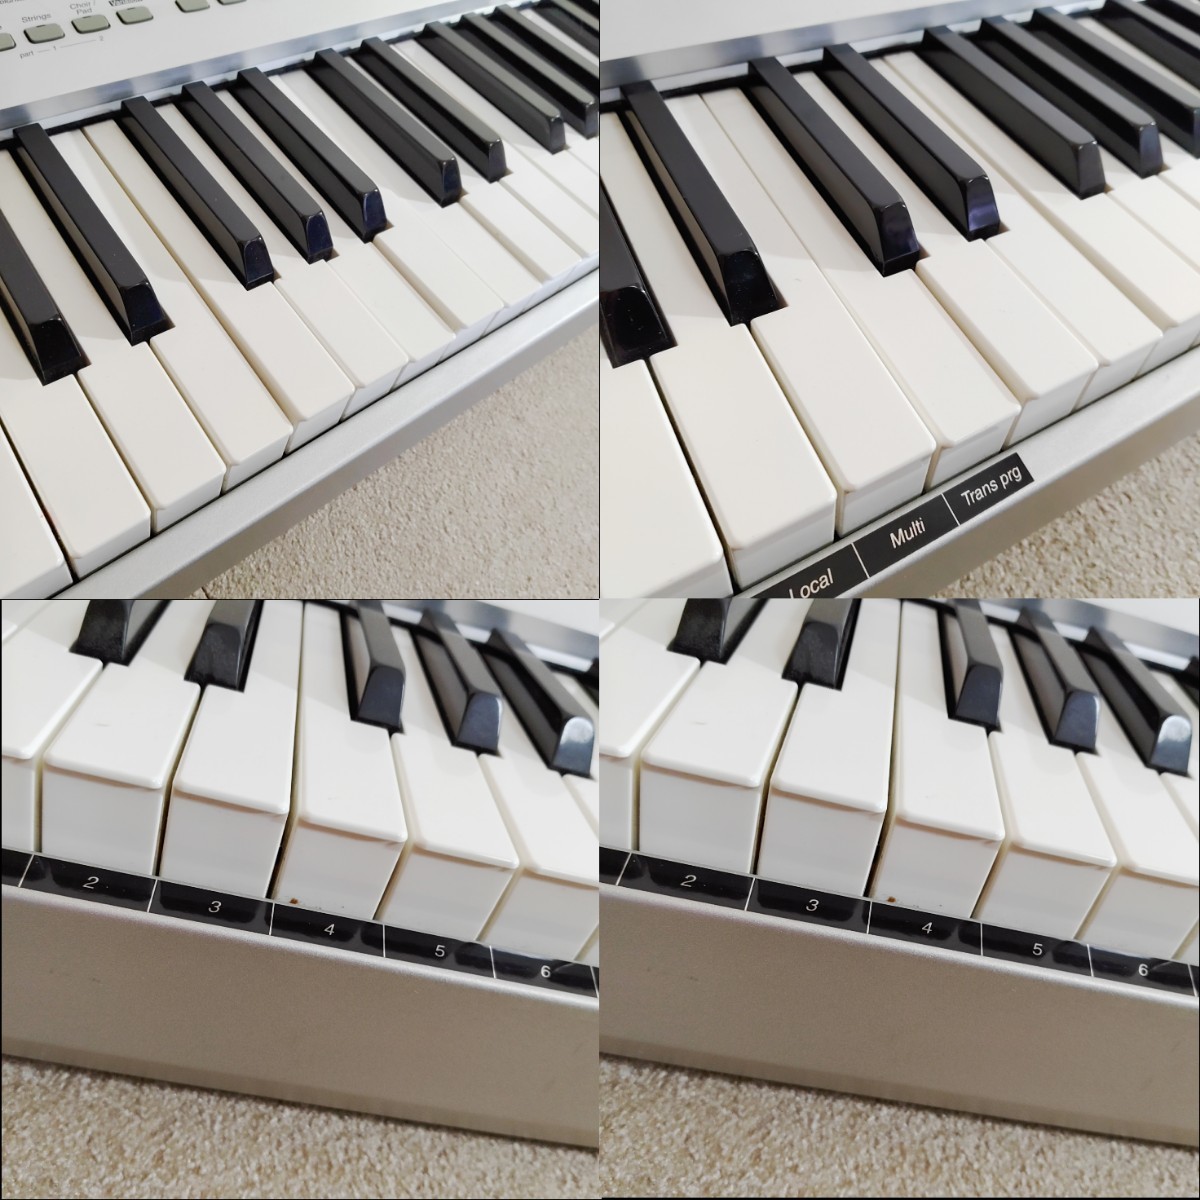 kawai Kawai цифровой фортепьяно электронное пианино es-1 88 клавиатура пюпитр педаль 